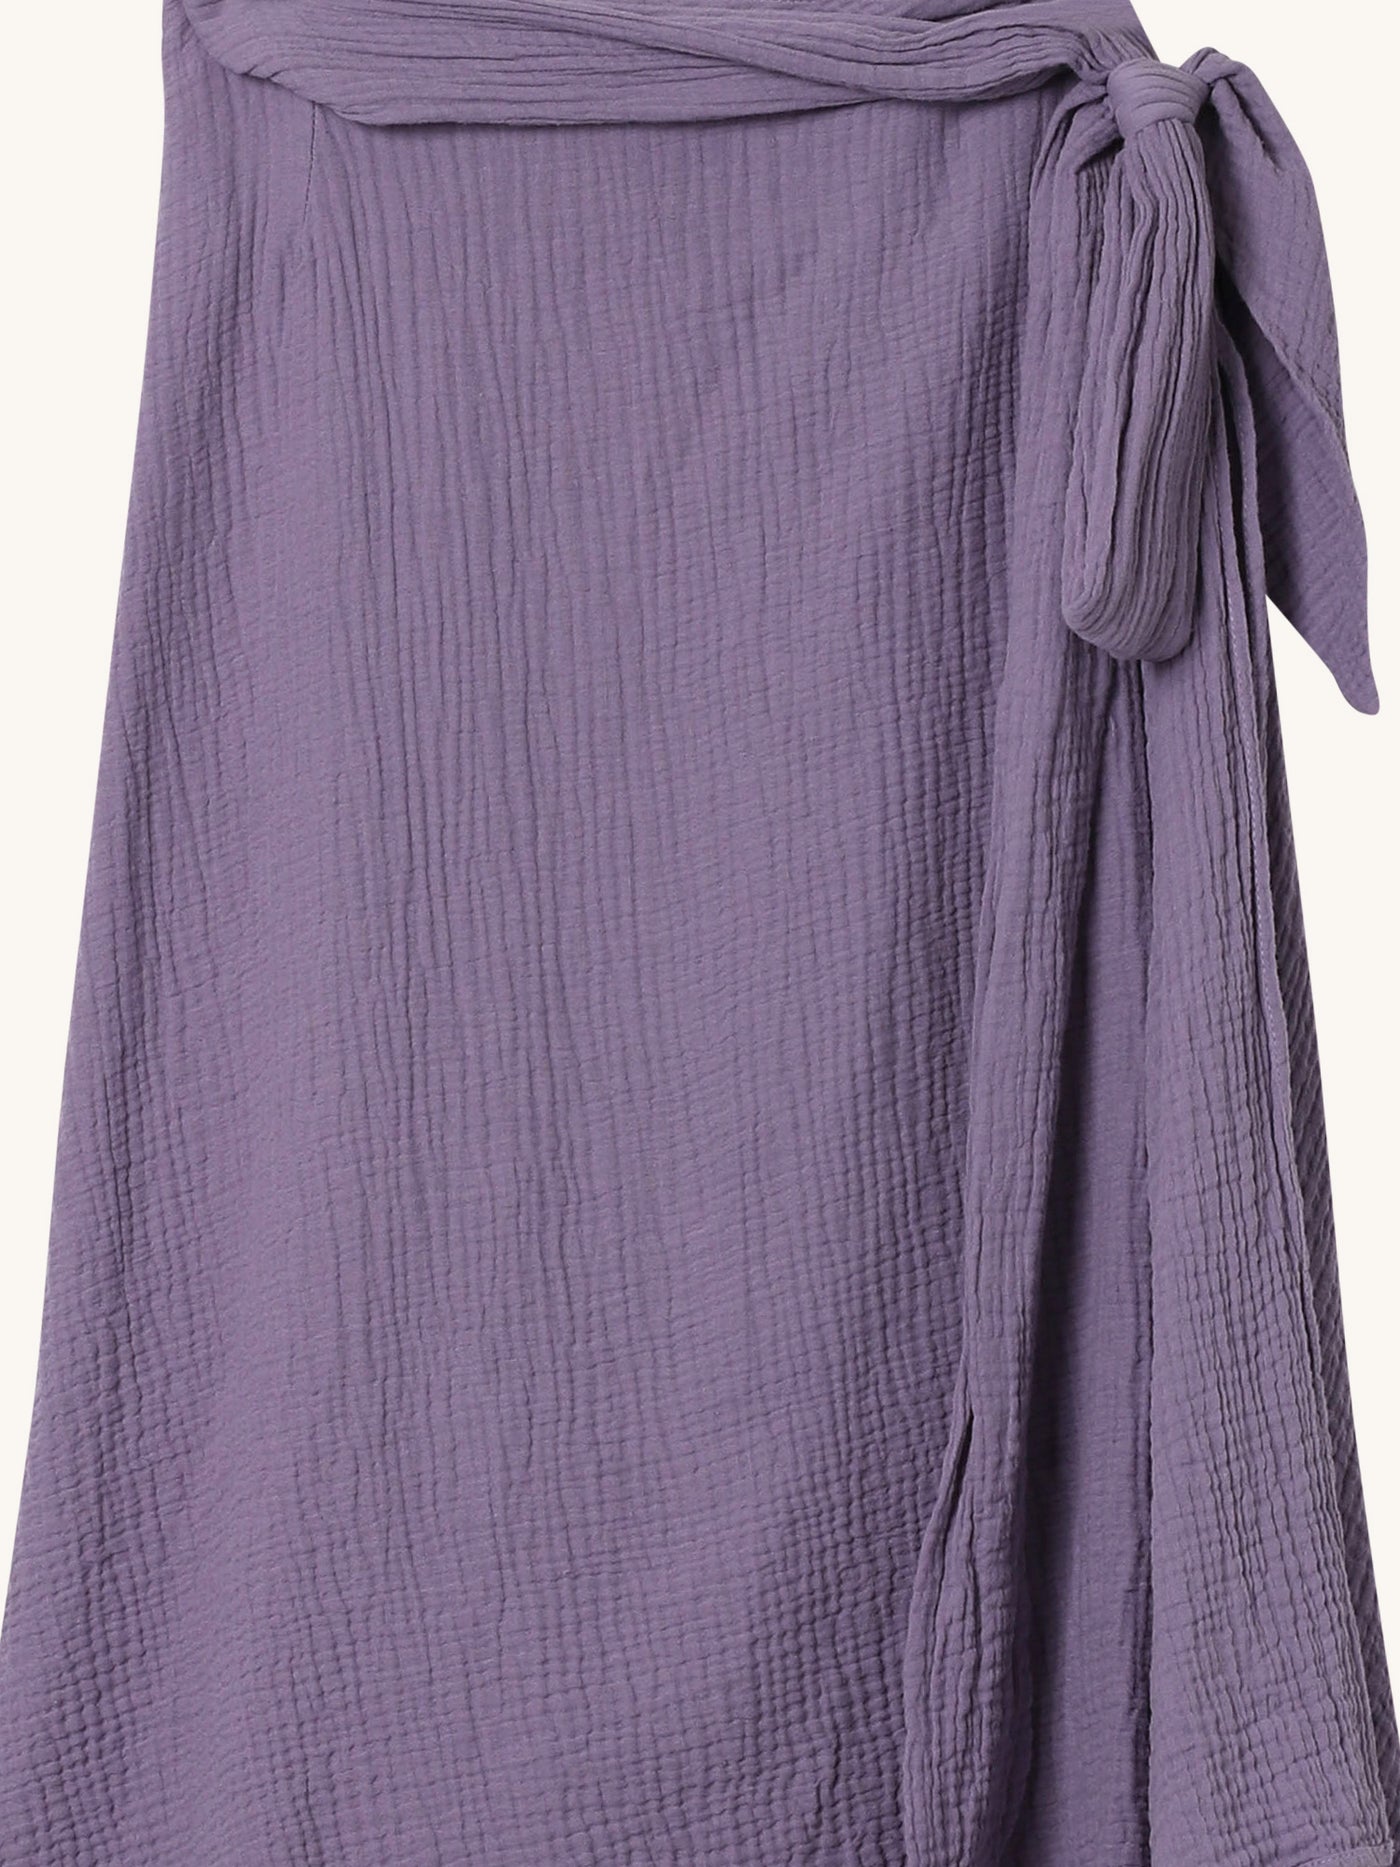 Gauze Gwendolyn Skirt in Lavender